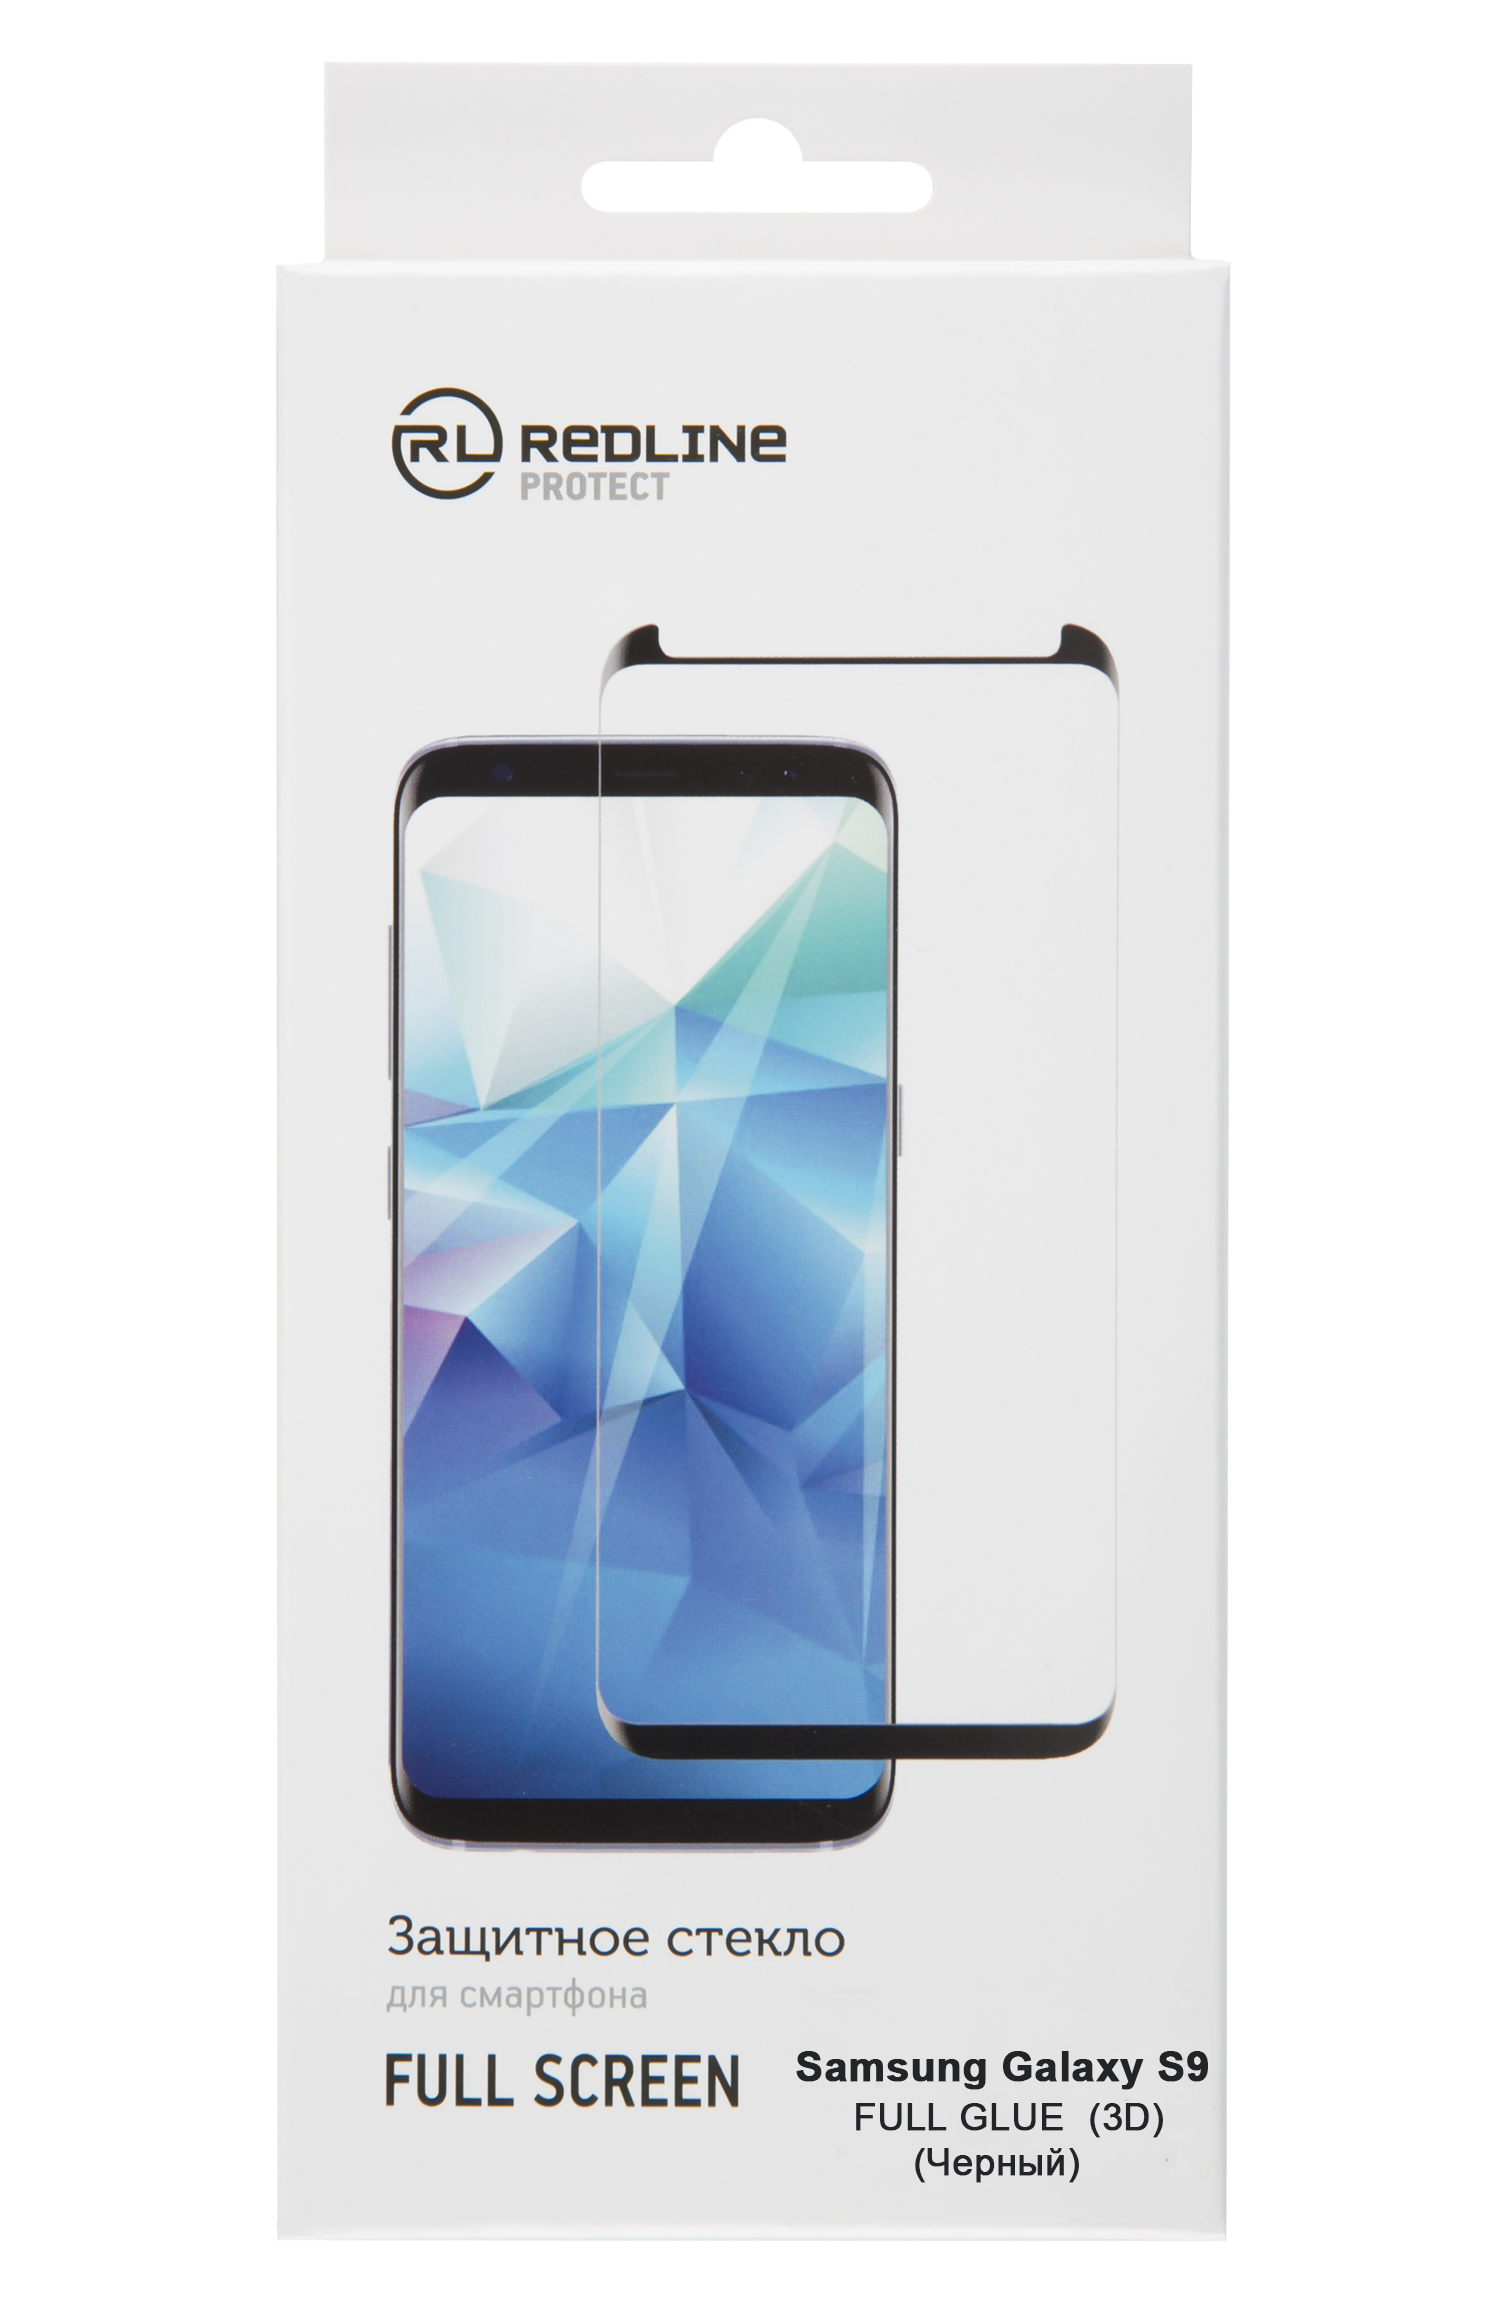 Защитный экран Samsung Galaxy S9 Full screen (3D) tempered glass FULL GLUE